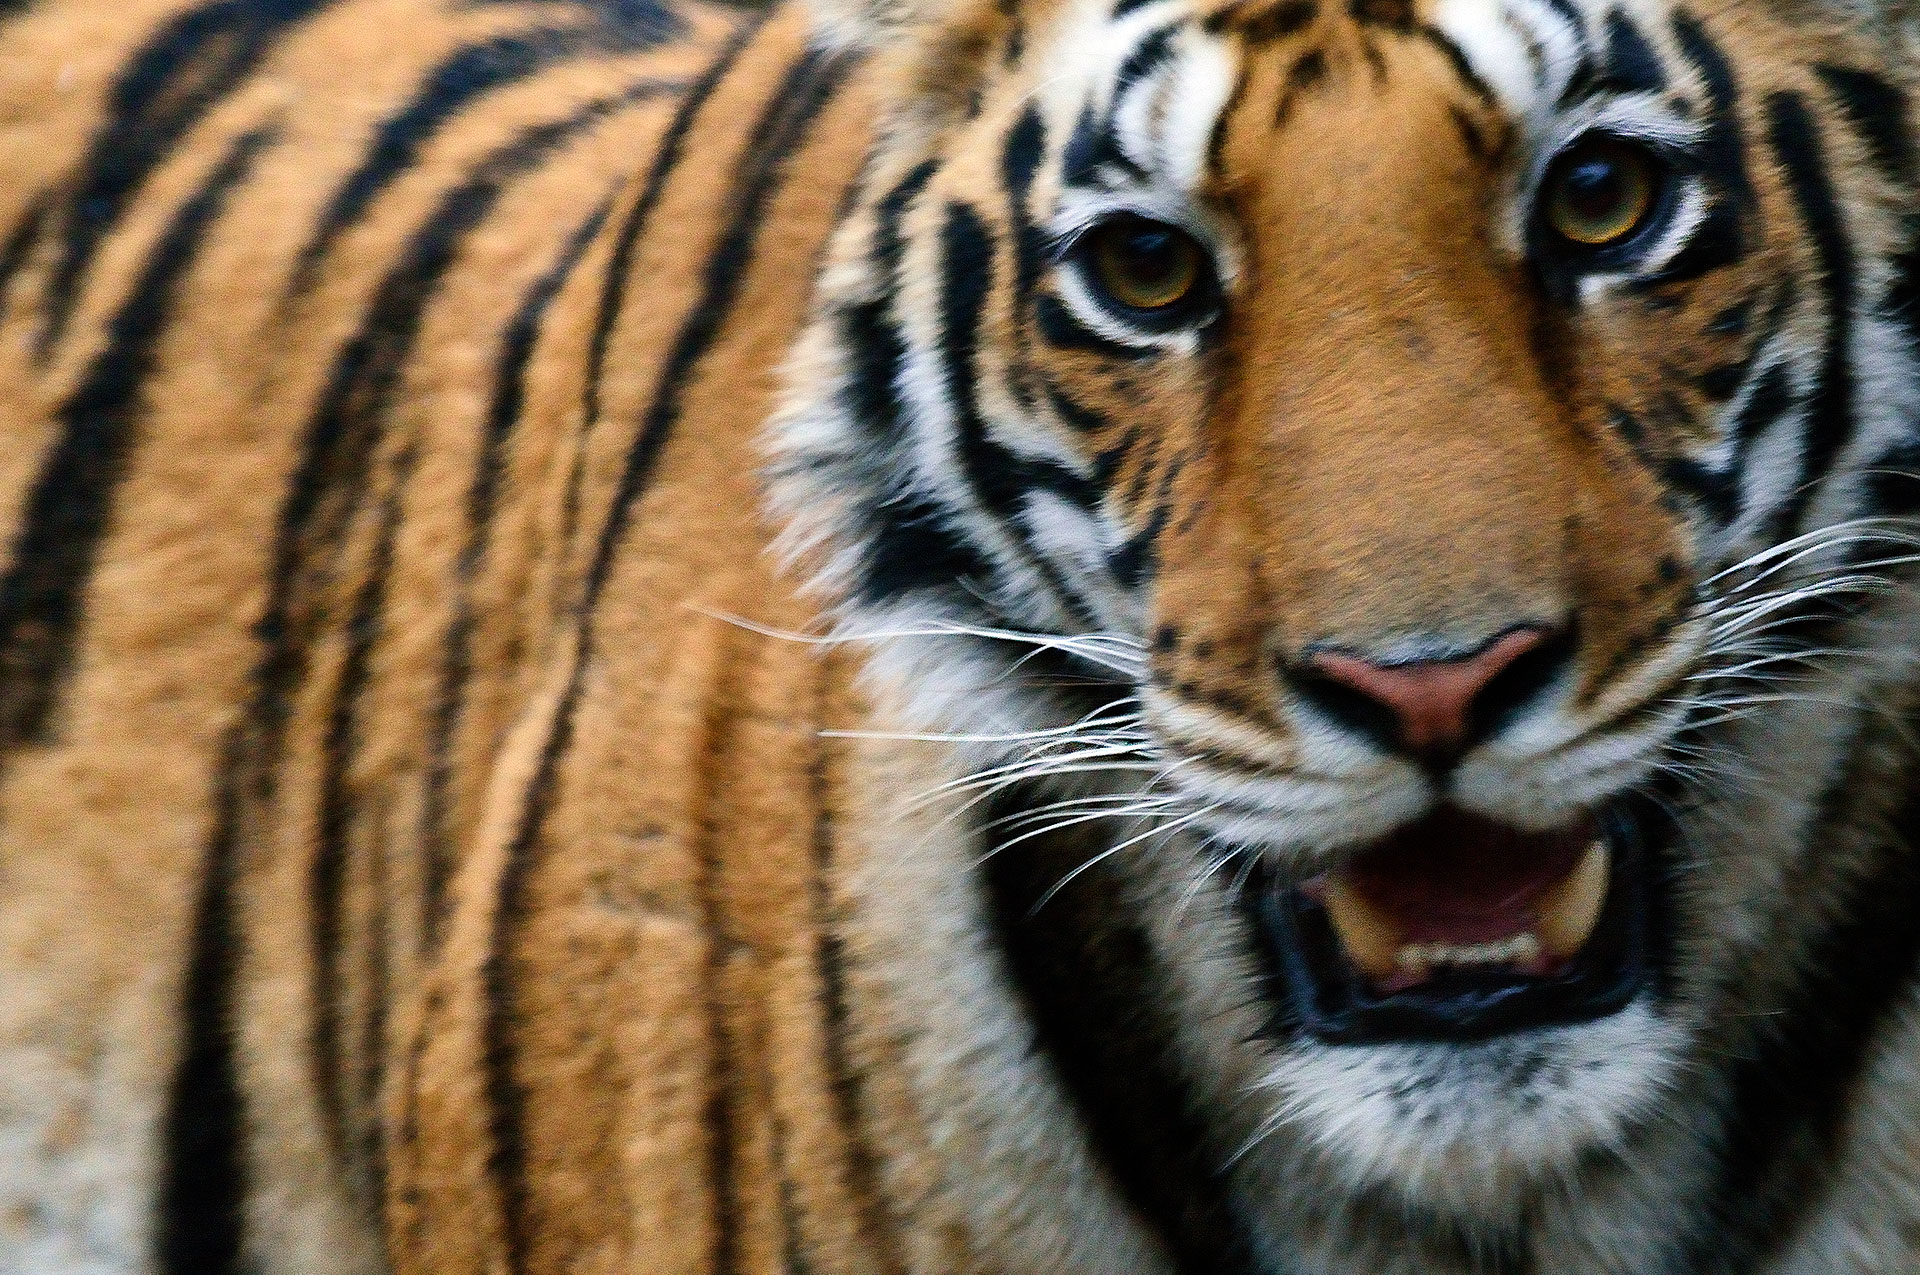 Close up a young tiger